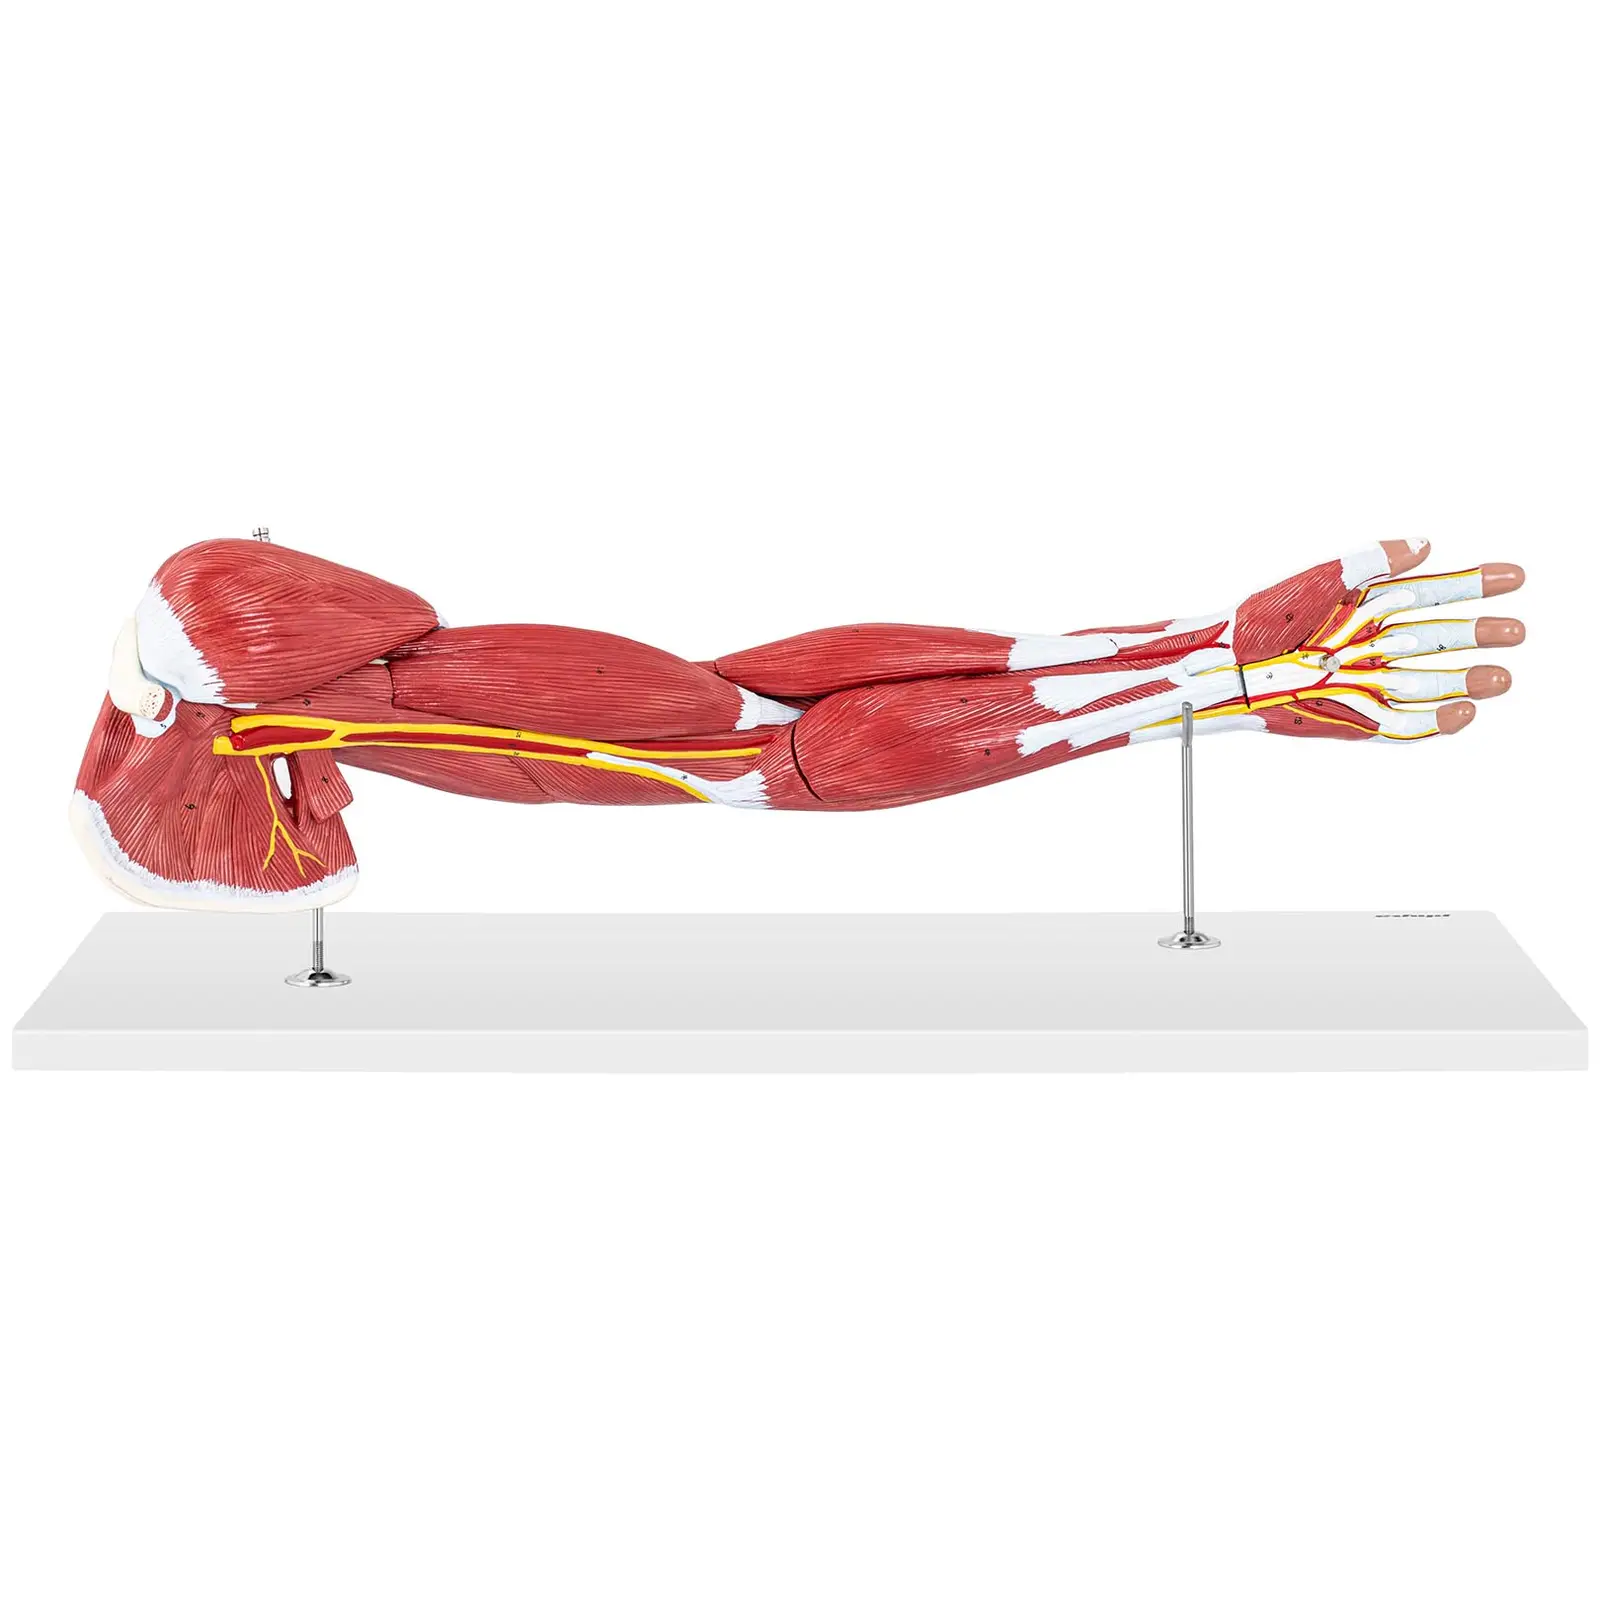 Maquette anatomique bras humain - En 7 parties - Grandeur nature